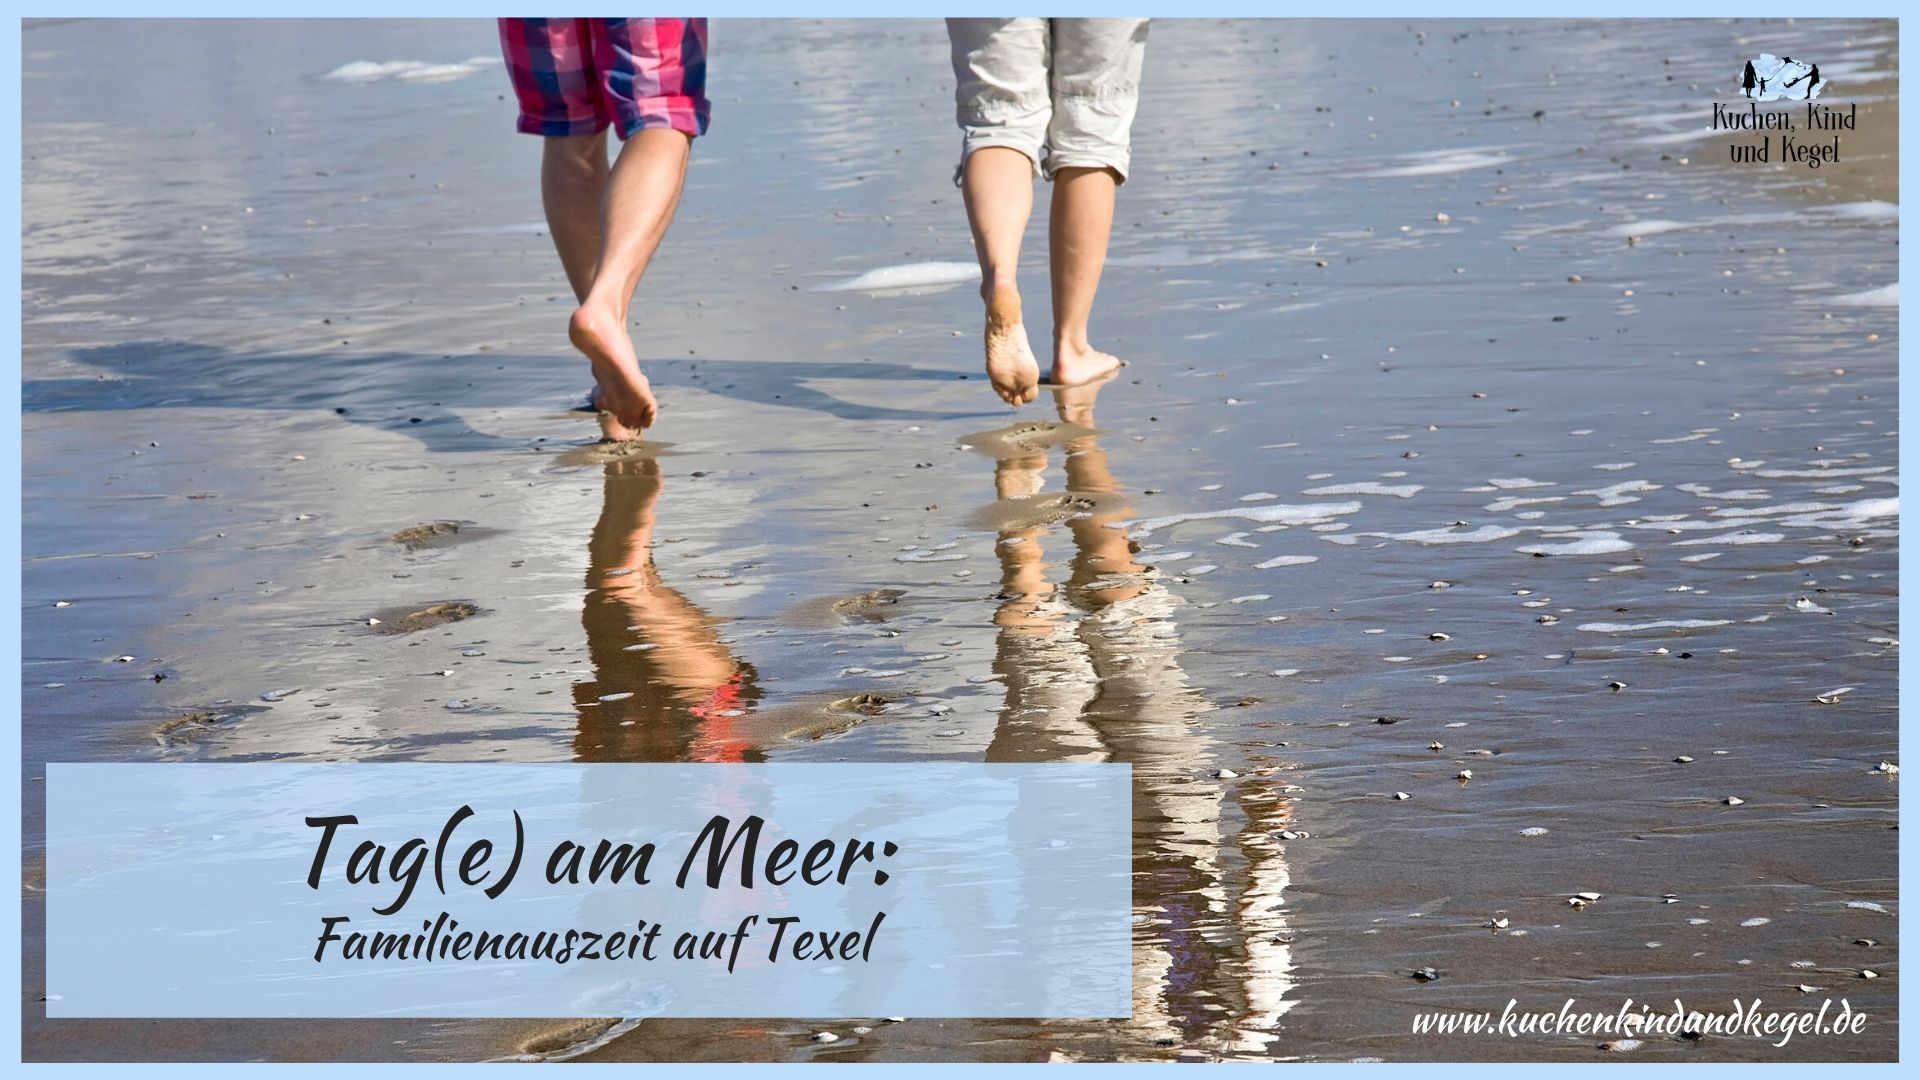 Tag(e) am Meer: Familienauszeit auf Texel